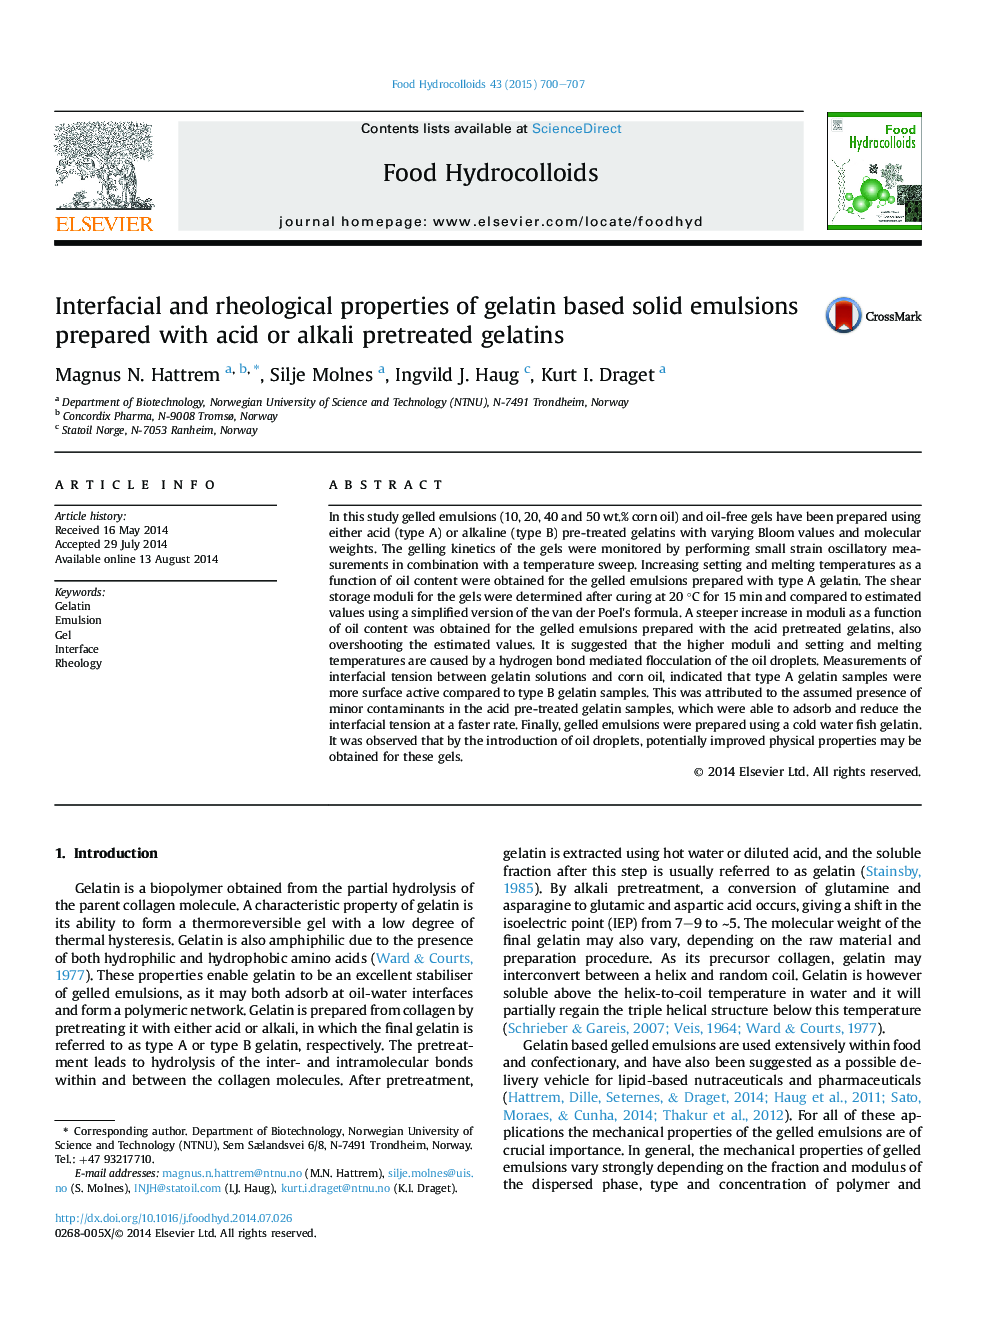 Interfacial and rheological properties of gelatin based solid emulsions prepared with acid or alkali pretreated gelatins